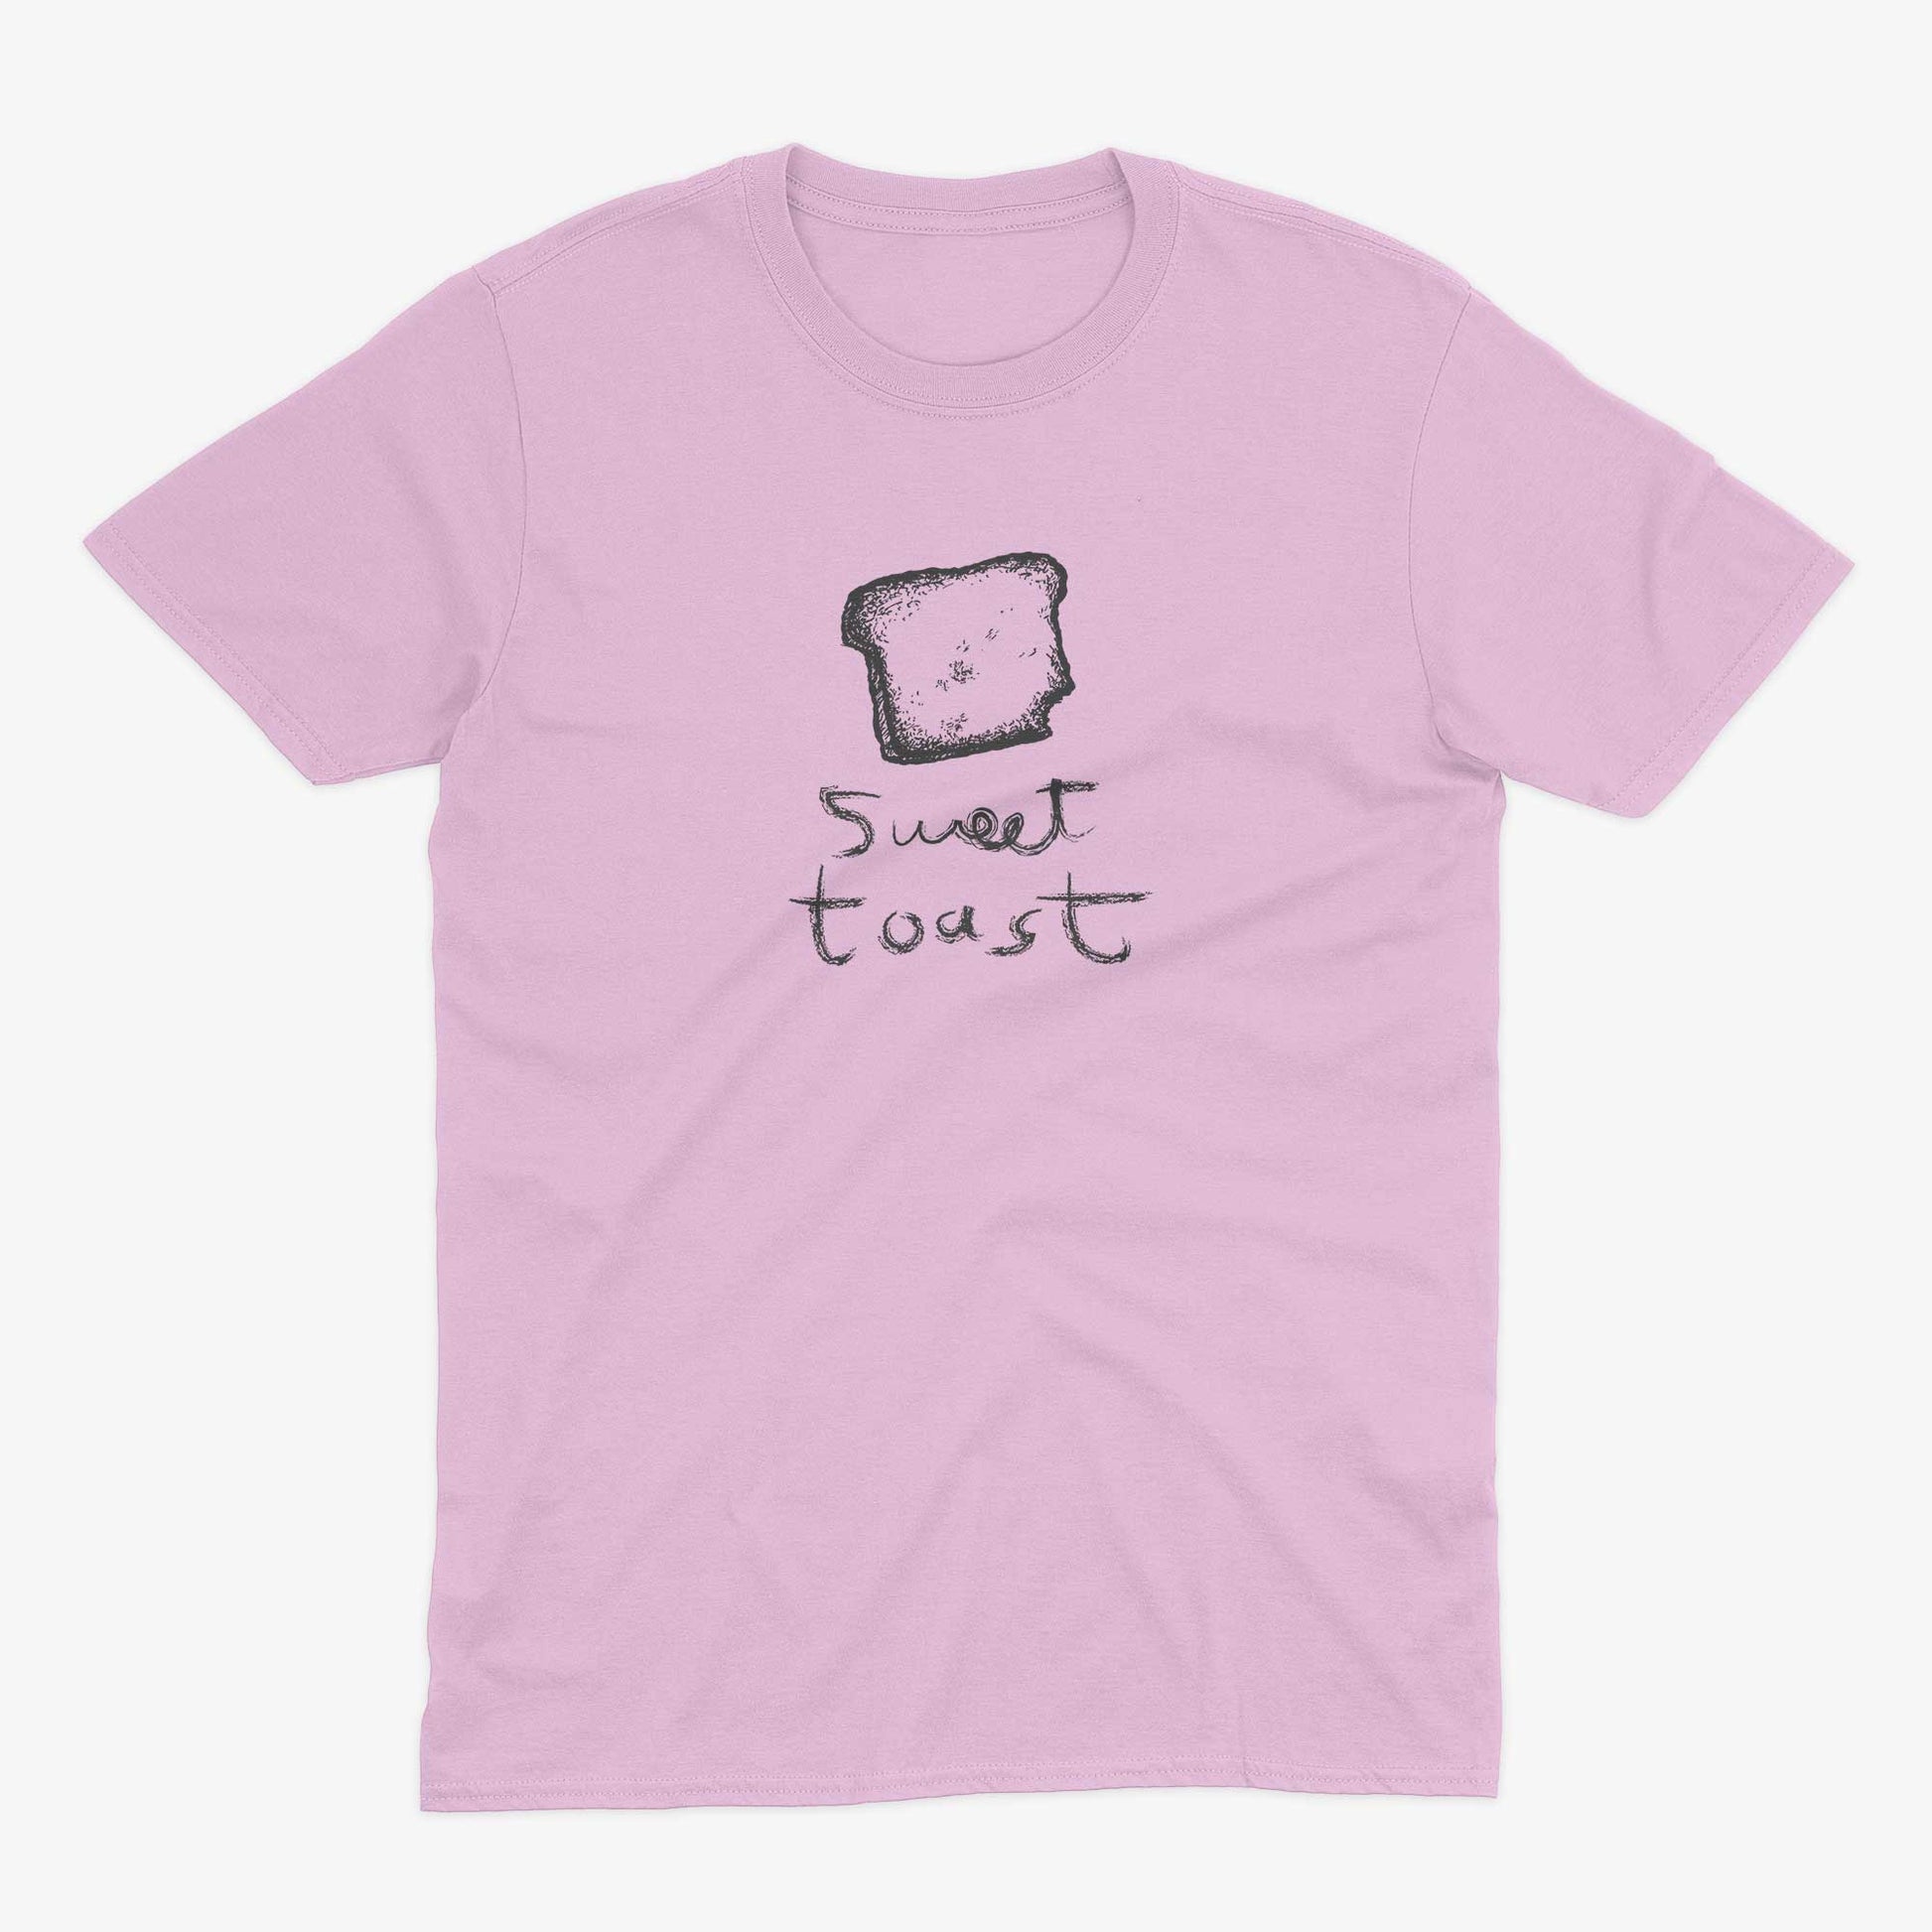 Sweet Toast Unisex Or Women's Cotton T-shirt-Pink-Unisex